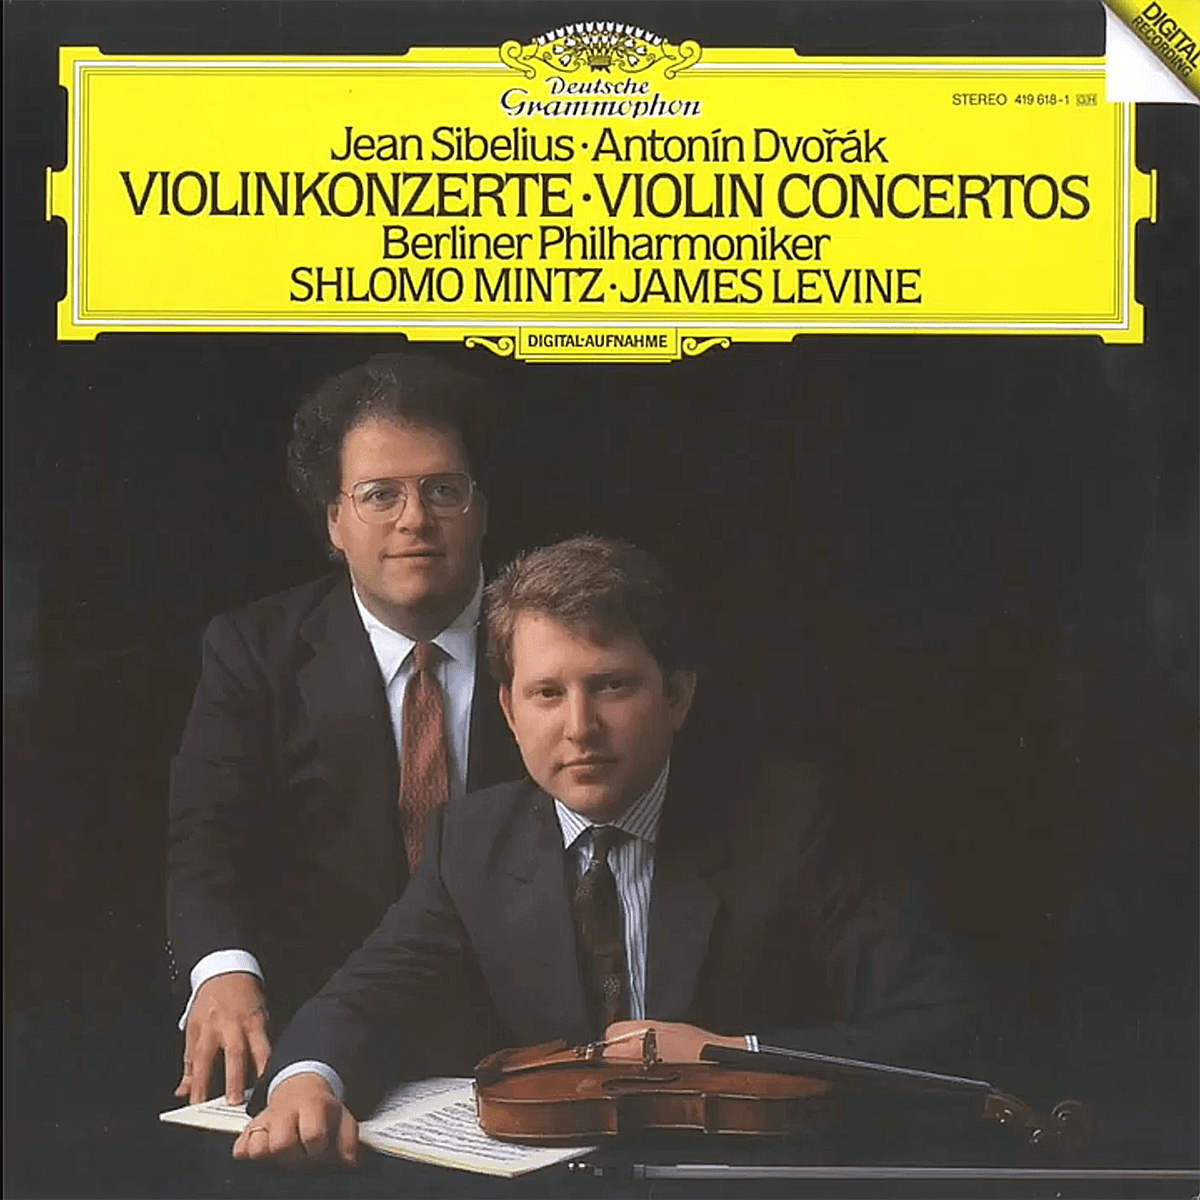 DGG 419 618 Sibelius Dvorak Concertos Violon Mintz Levine DGG Digital Aufnahme